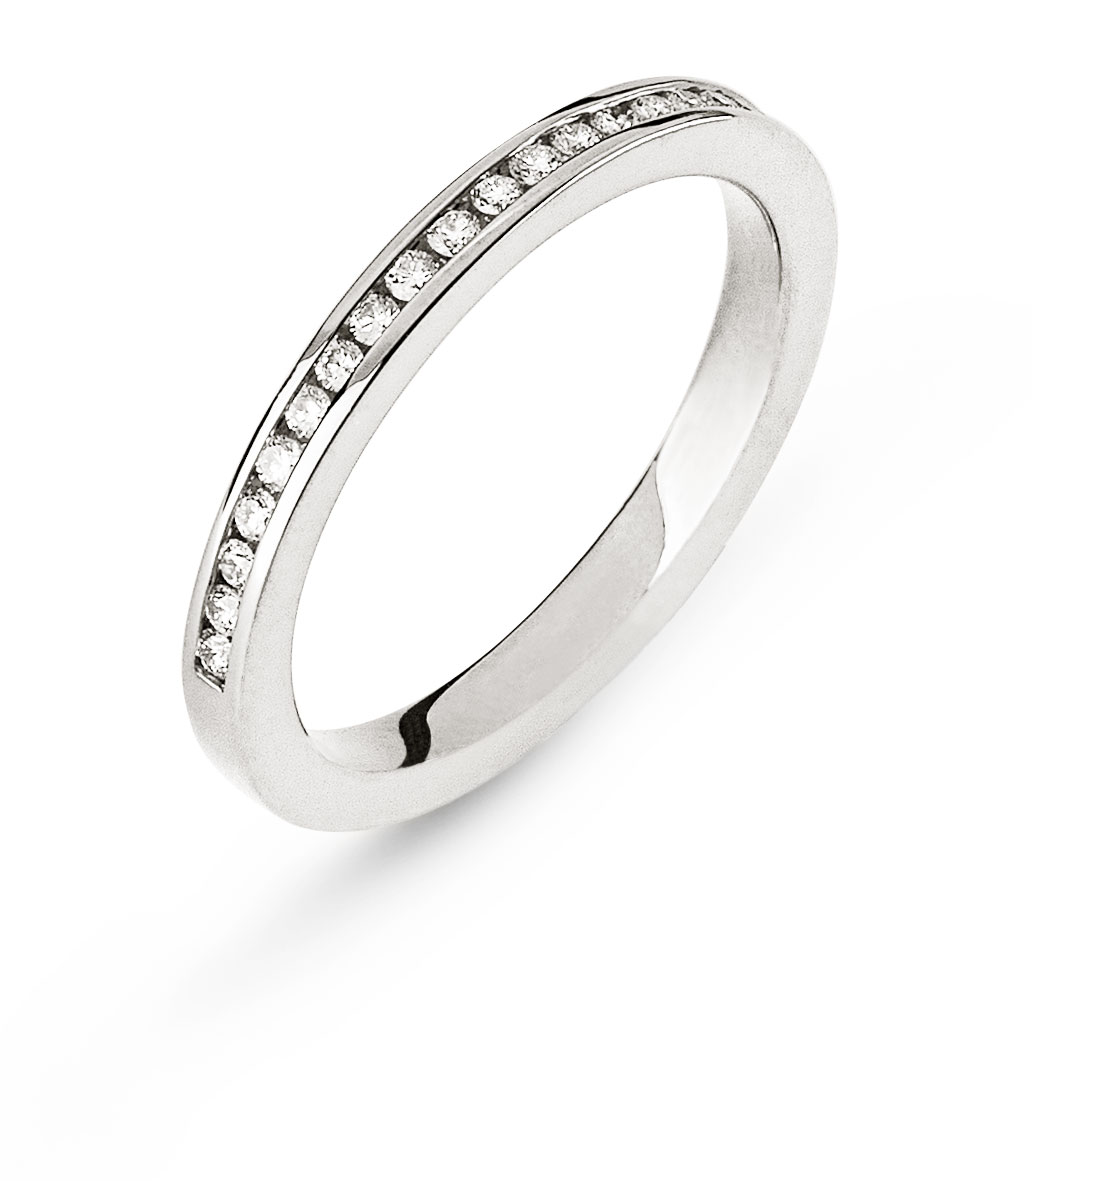 AURONOS Prestige Mémoire Ring White Gold 18K Channel Setting Diamonds 0.23ct